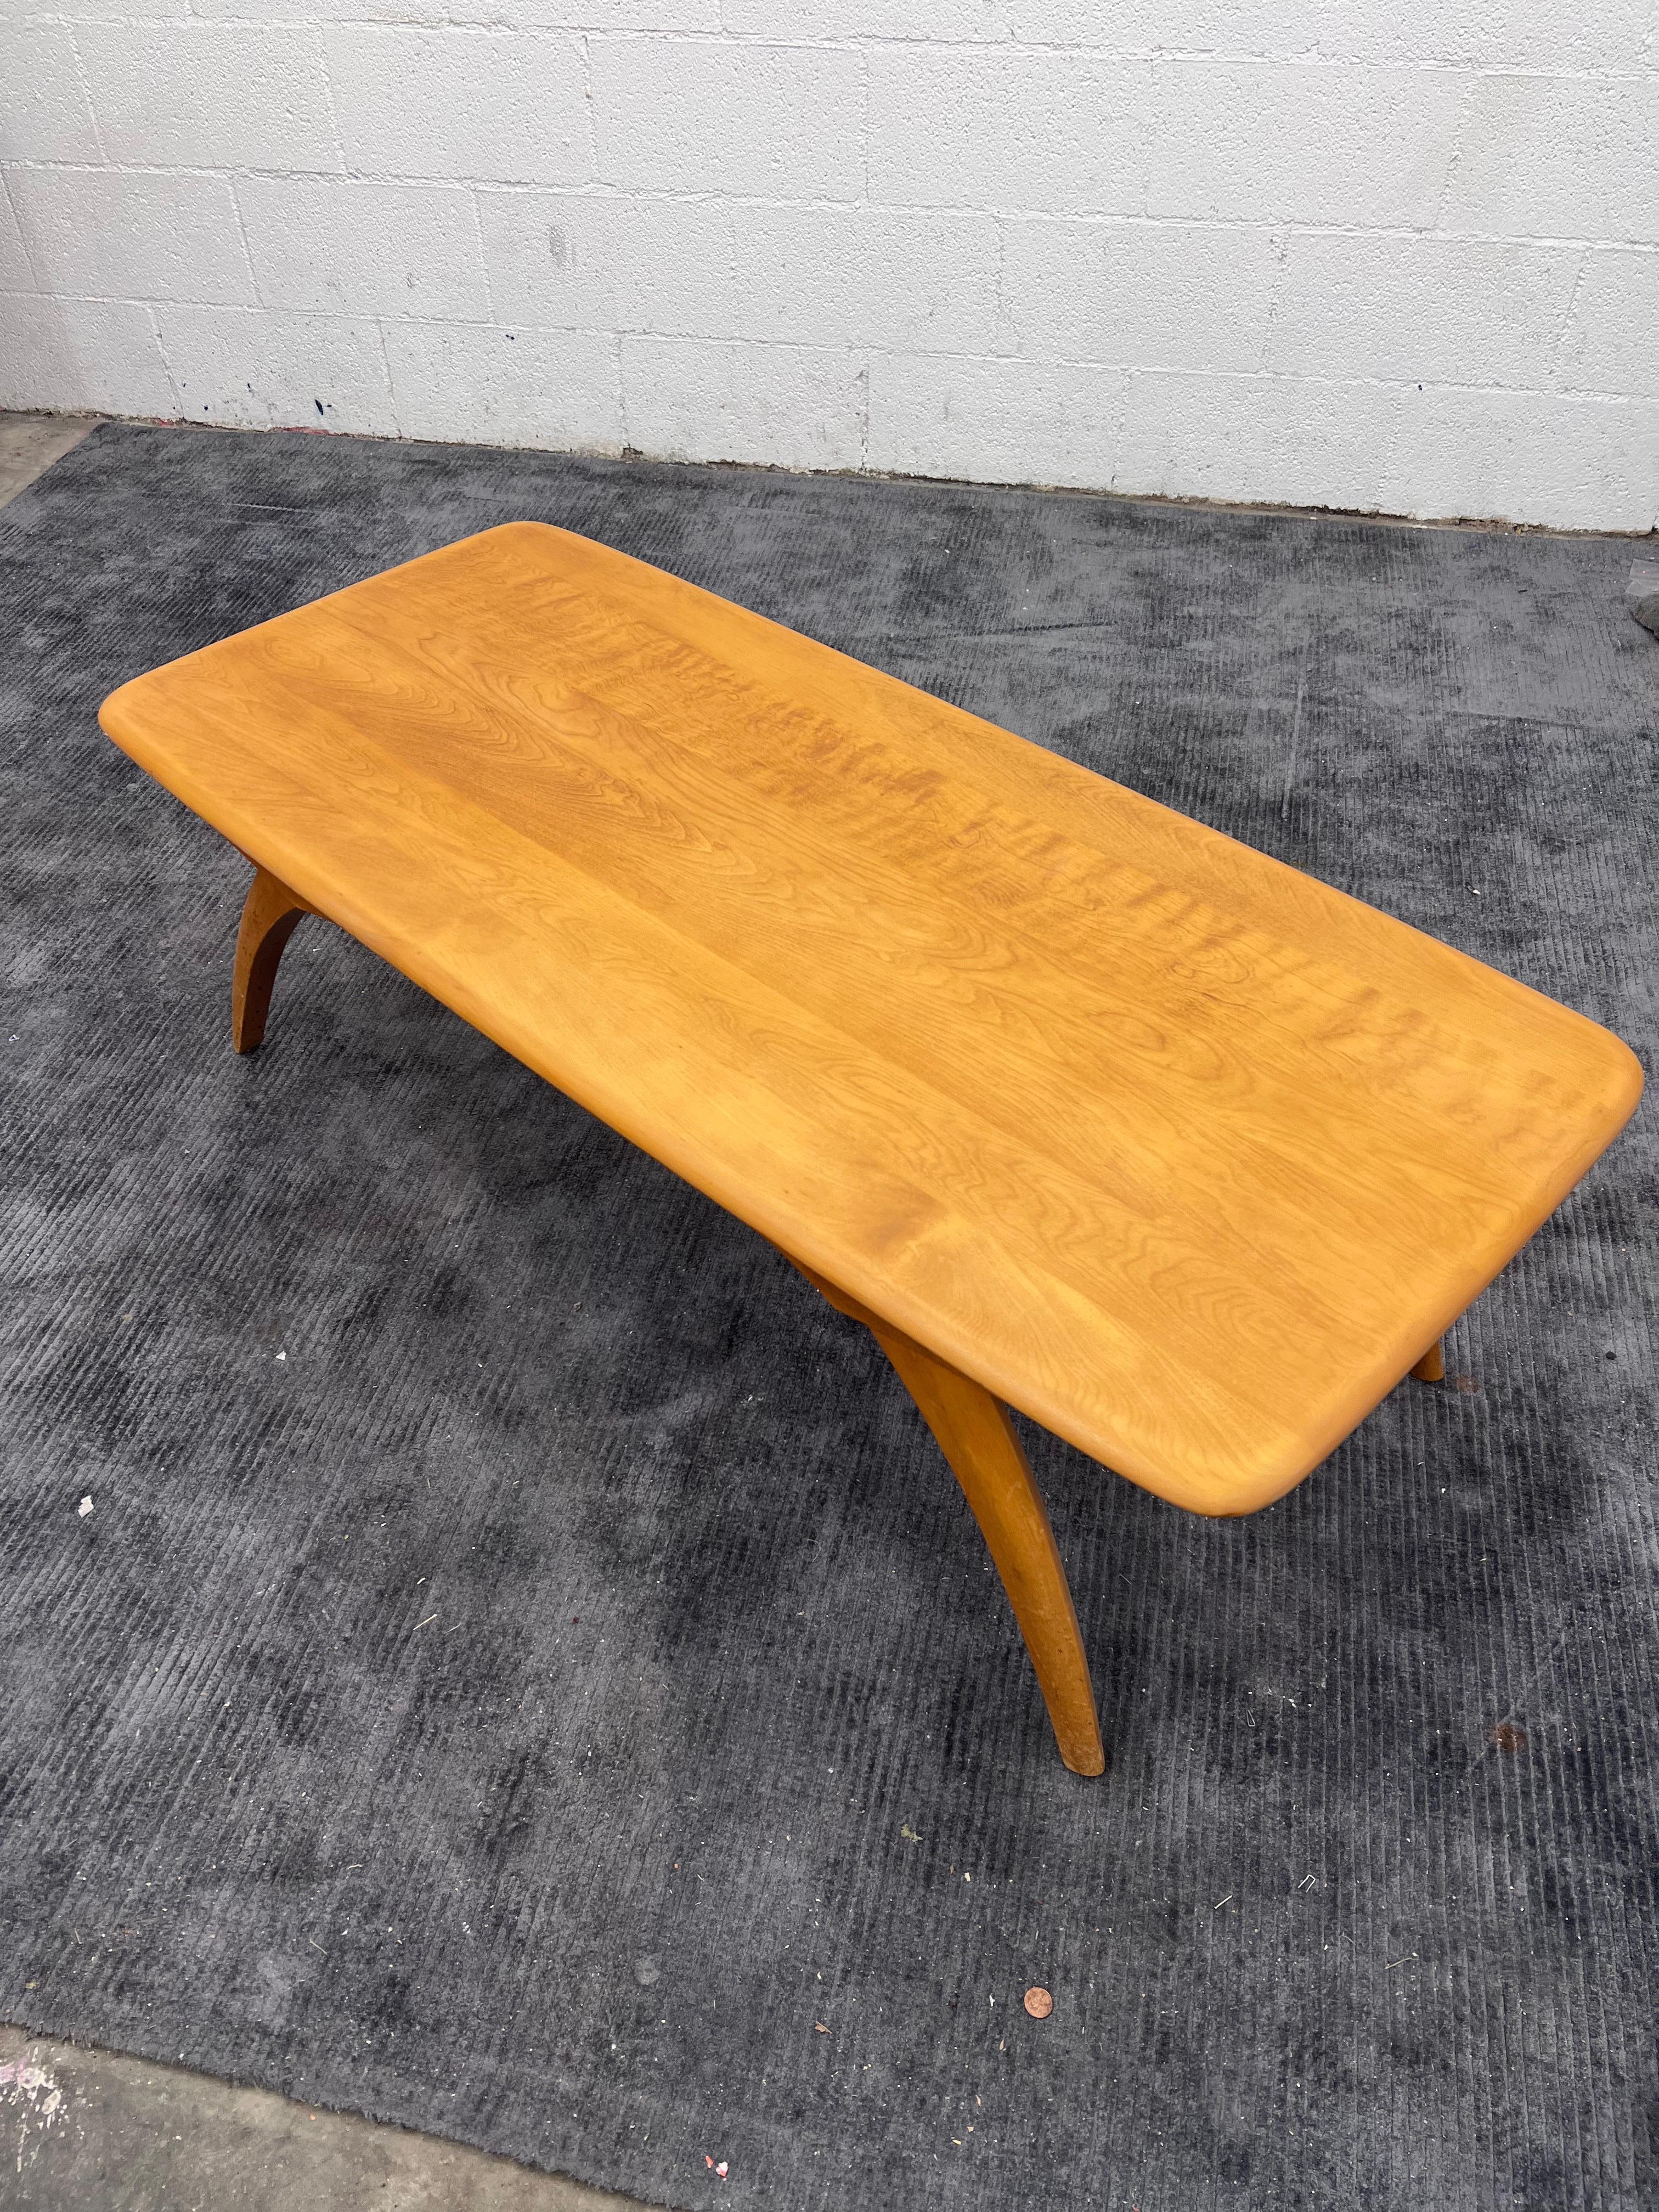 heywood wakefield coffee table